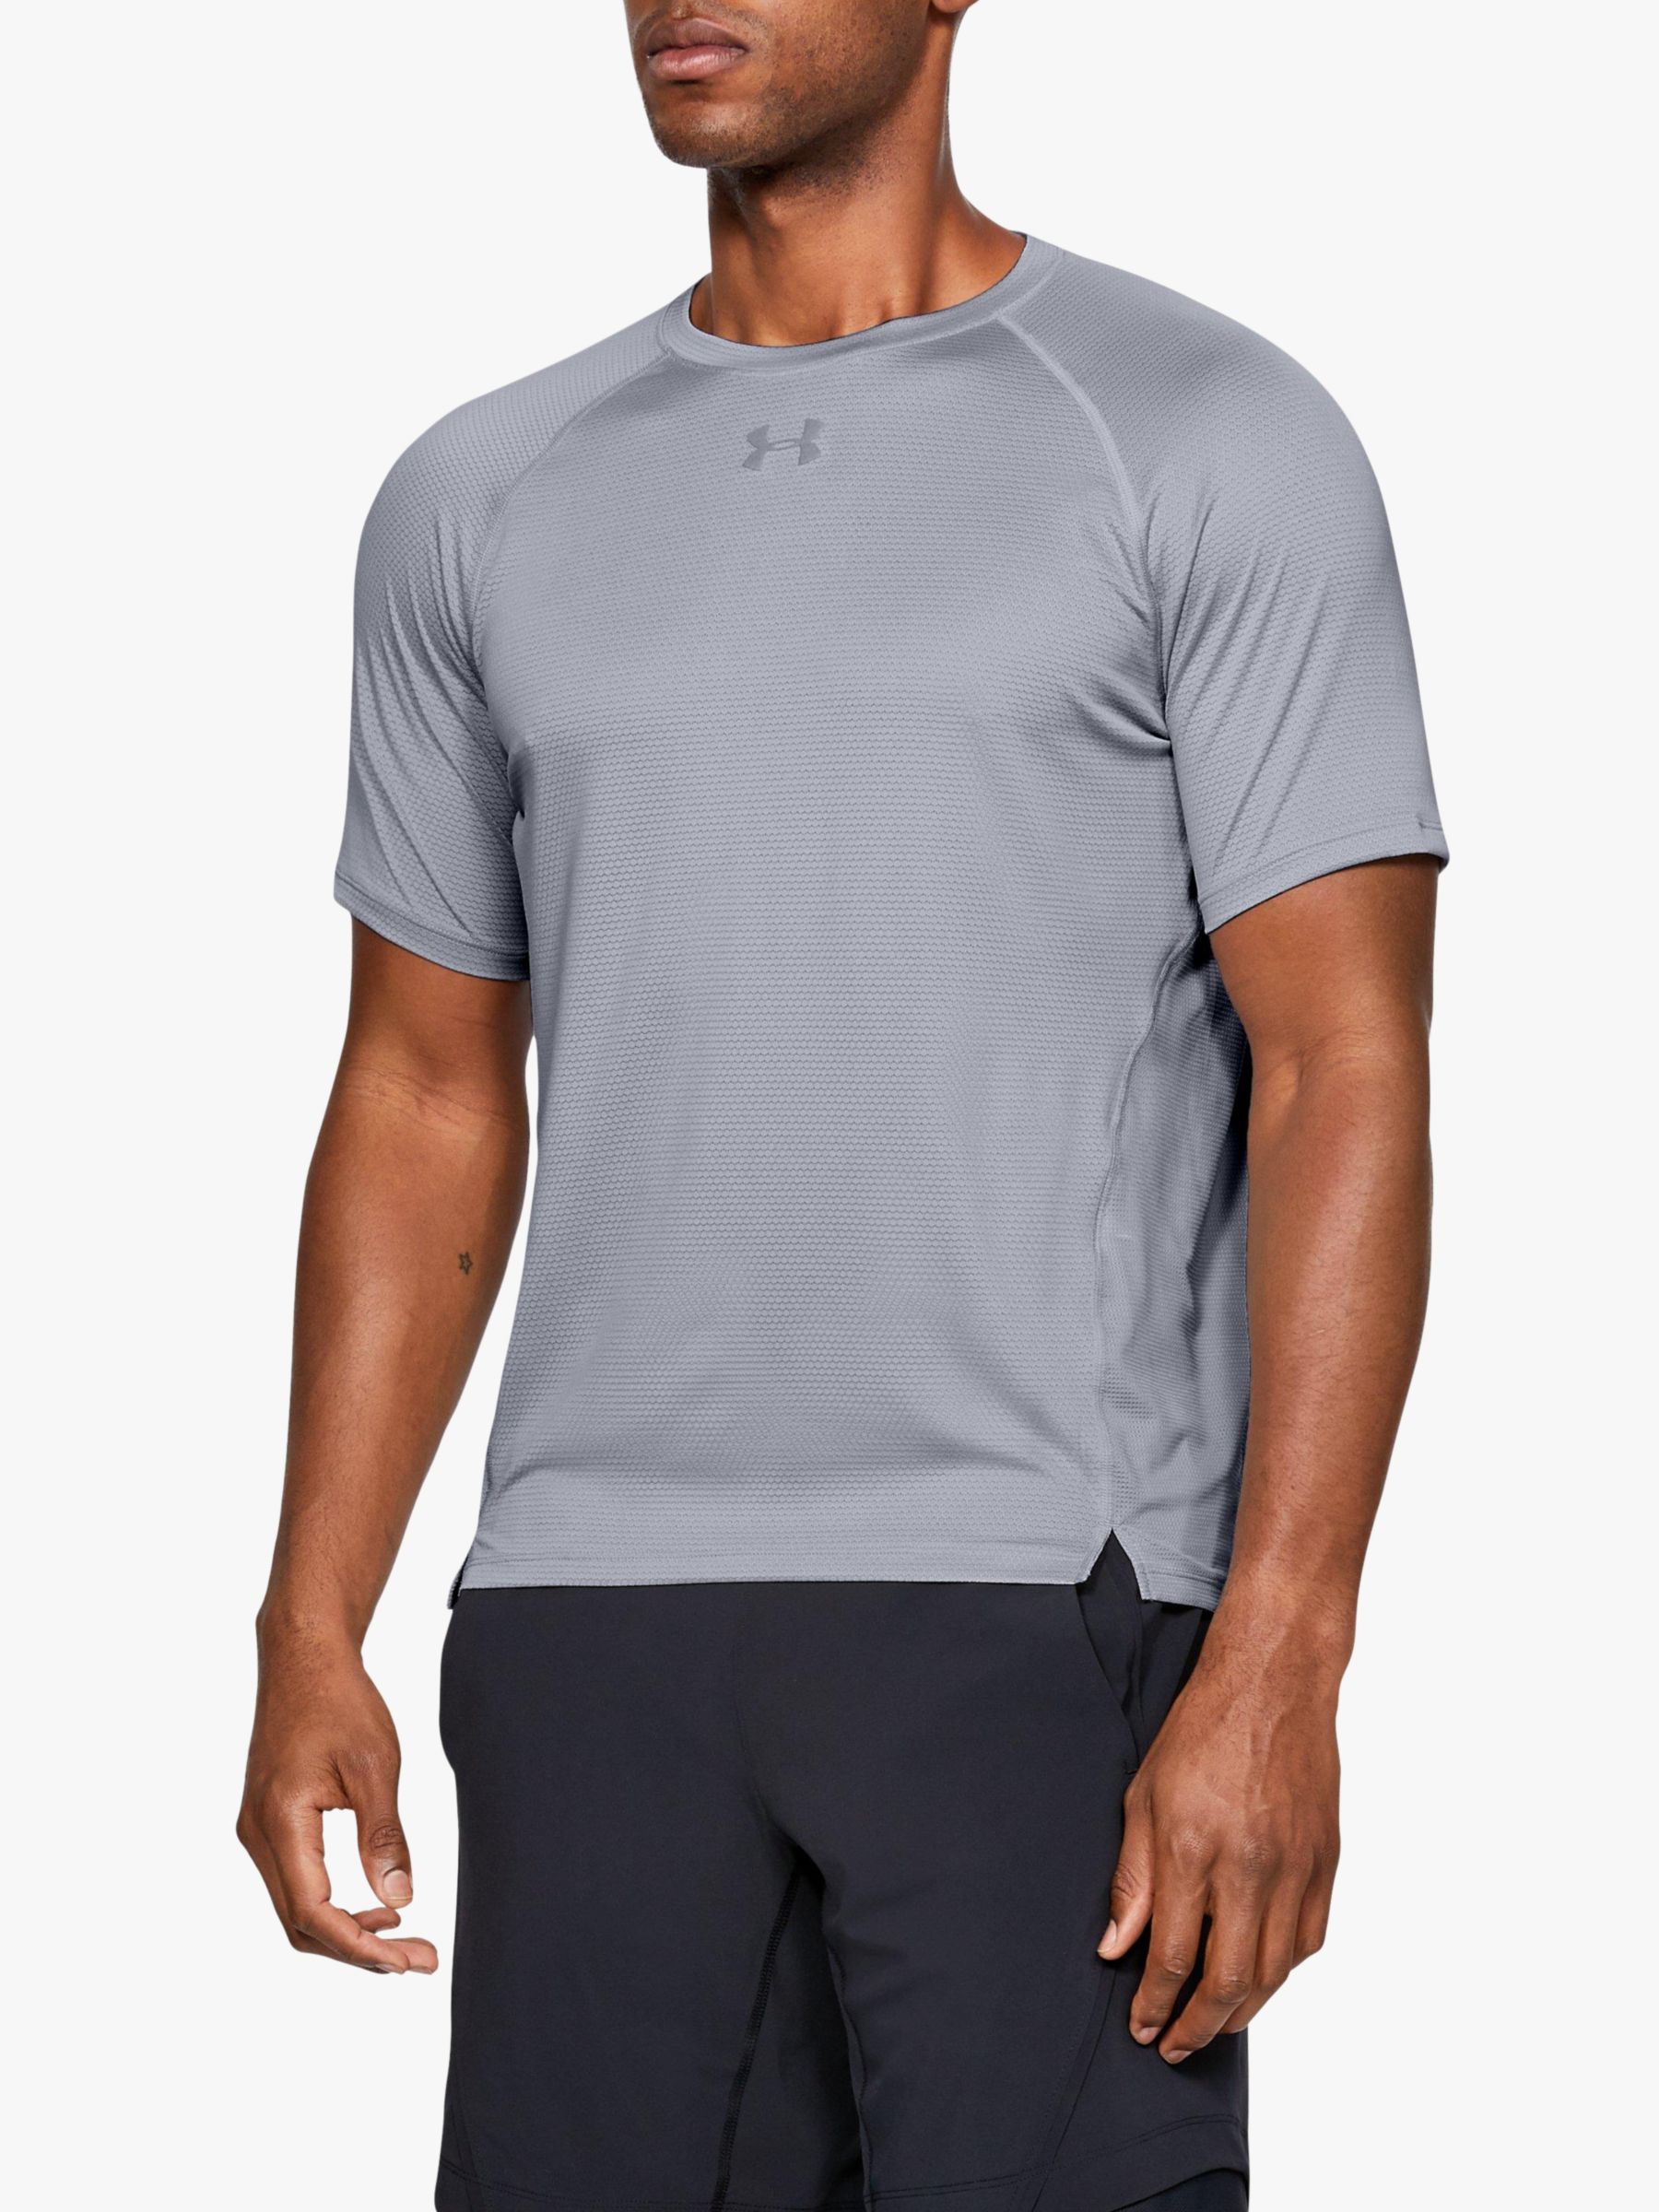 Under Armour Qualifier Short Sleeve Running T-Shirt, Grey